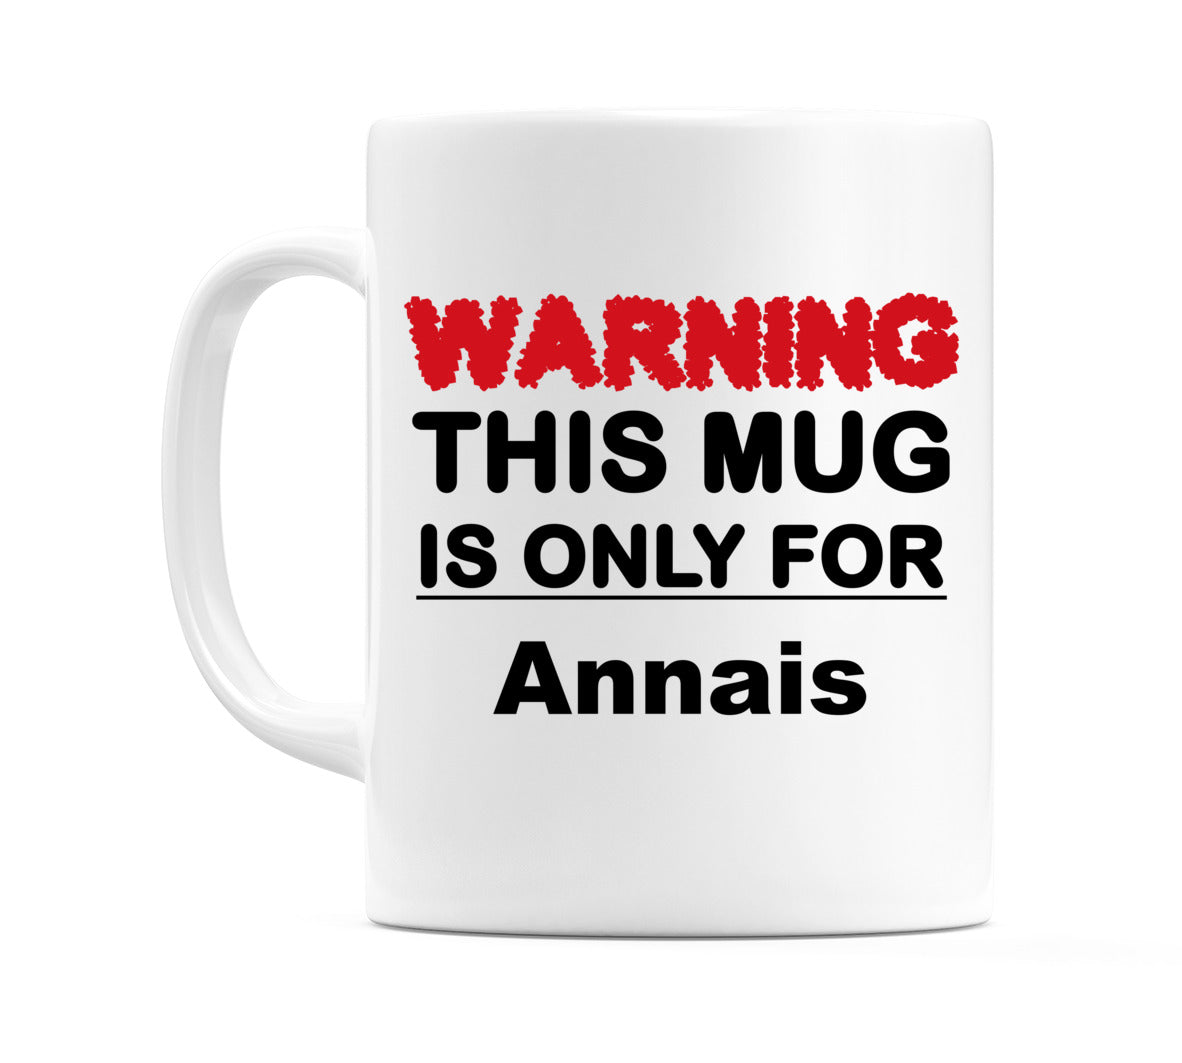 Warning This Mug is ONLY for Annais Mug